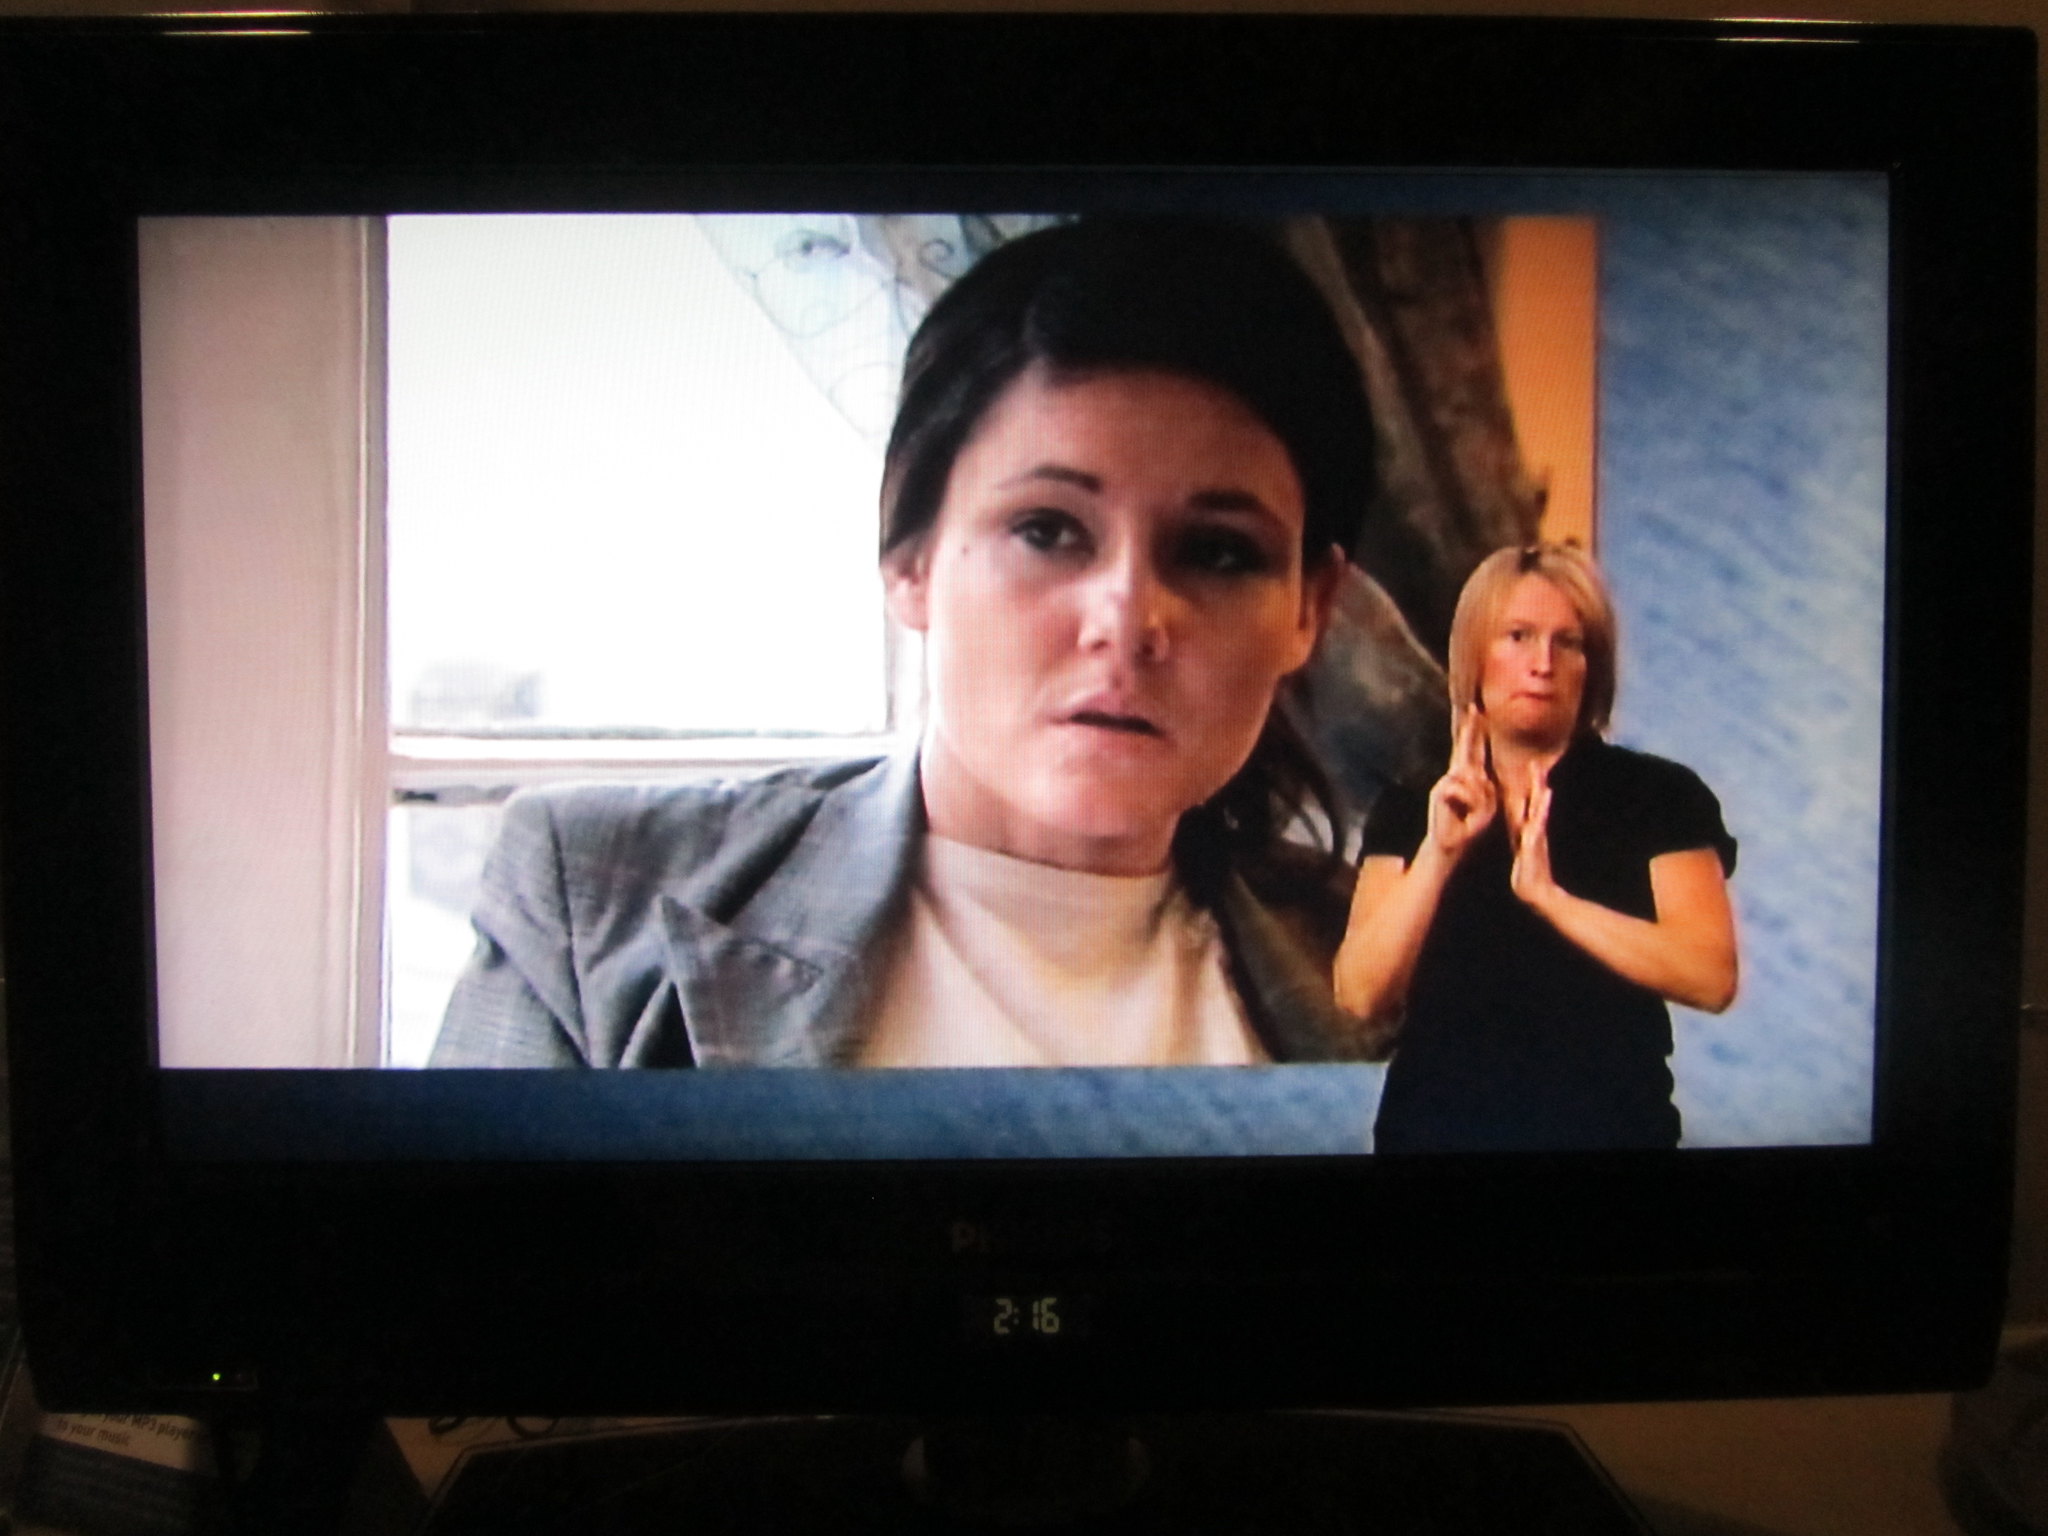 sign-language-on-tv.jpg